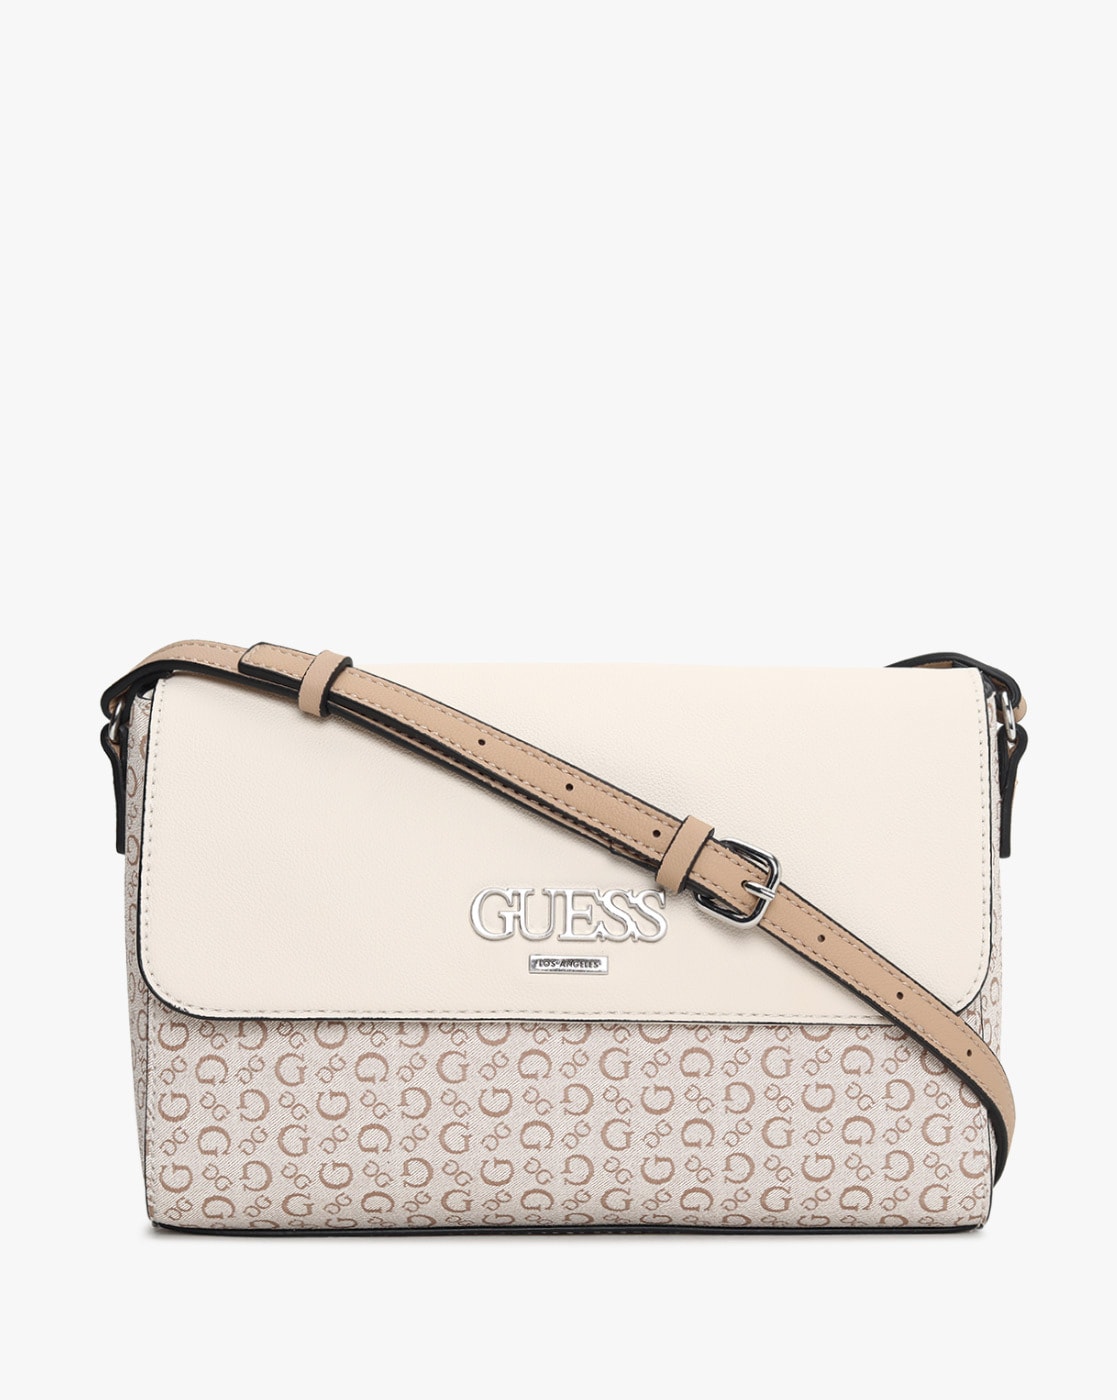 NEW GUESS Women's Beige Tan Logo Print Large Handbag Purse Satchel  Crossbody Bag | eBay